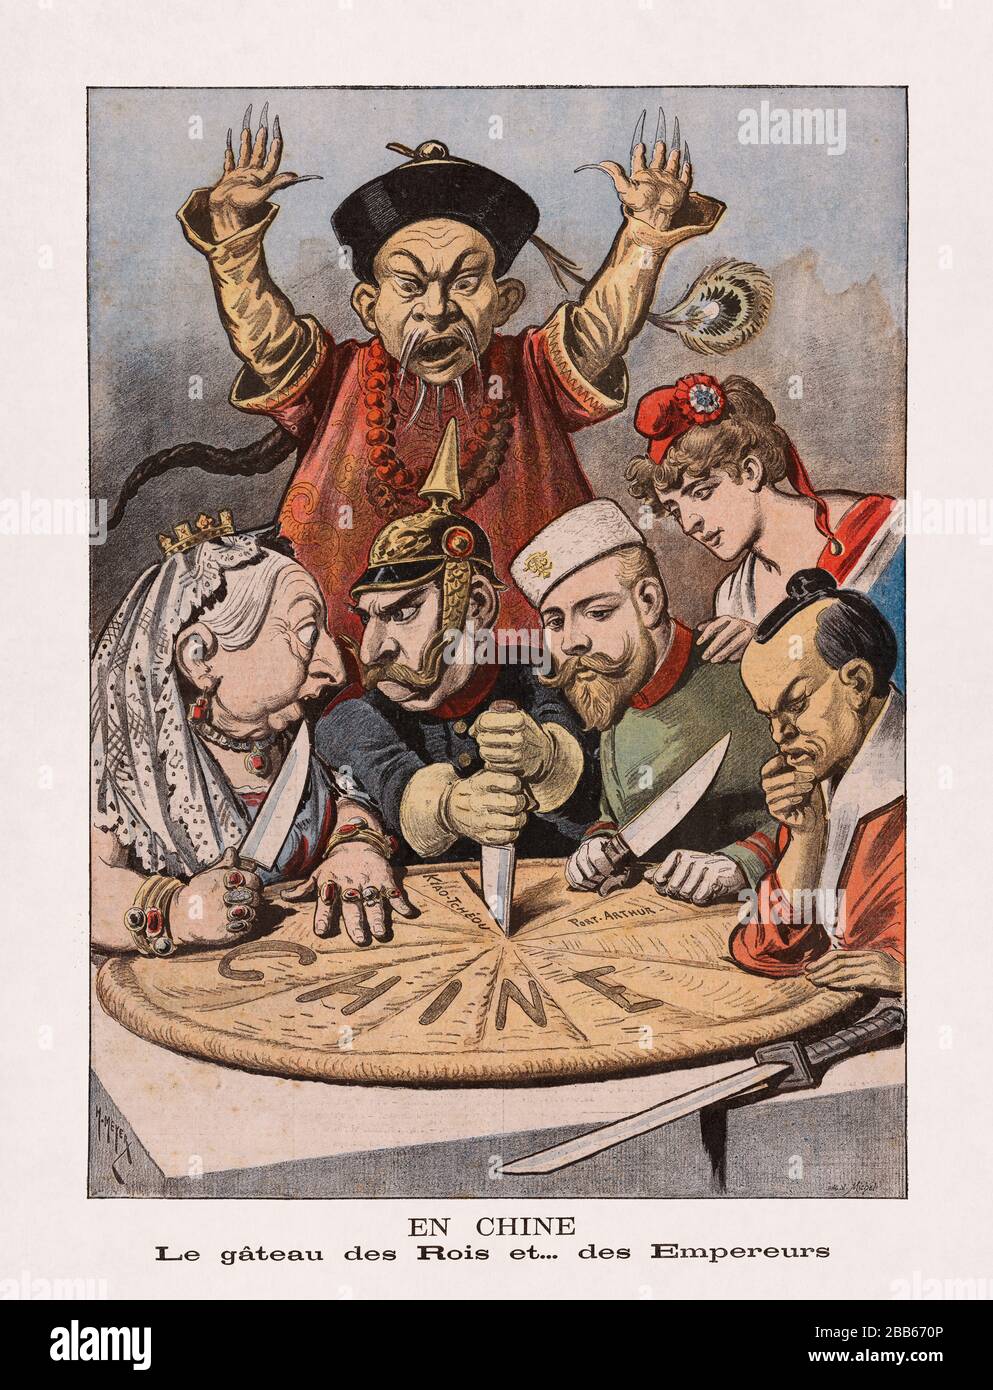 Old illustration about colonisation of China entitled 'En Chine, Le gâteau des Rois et… des Empereurs' by H. Meyer. Stock Photo